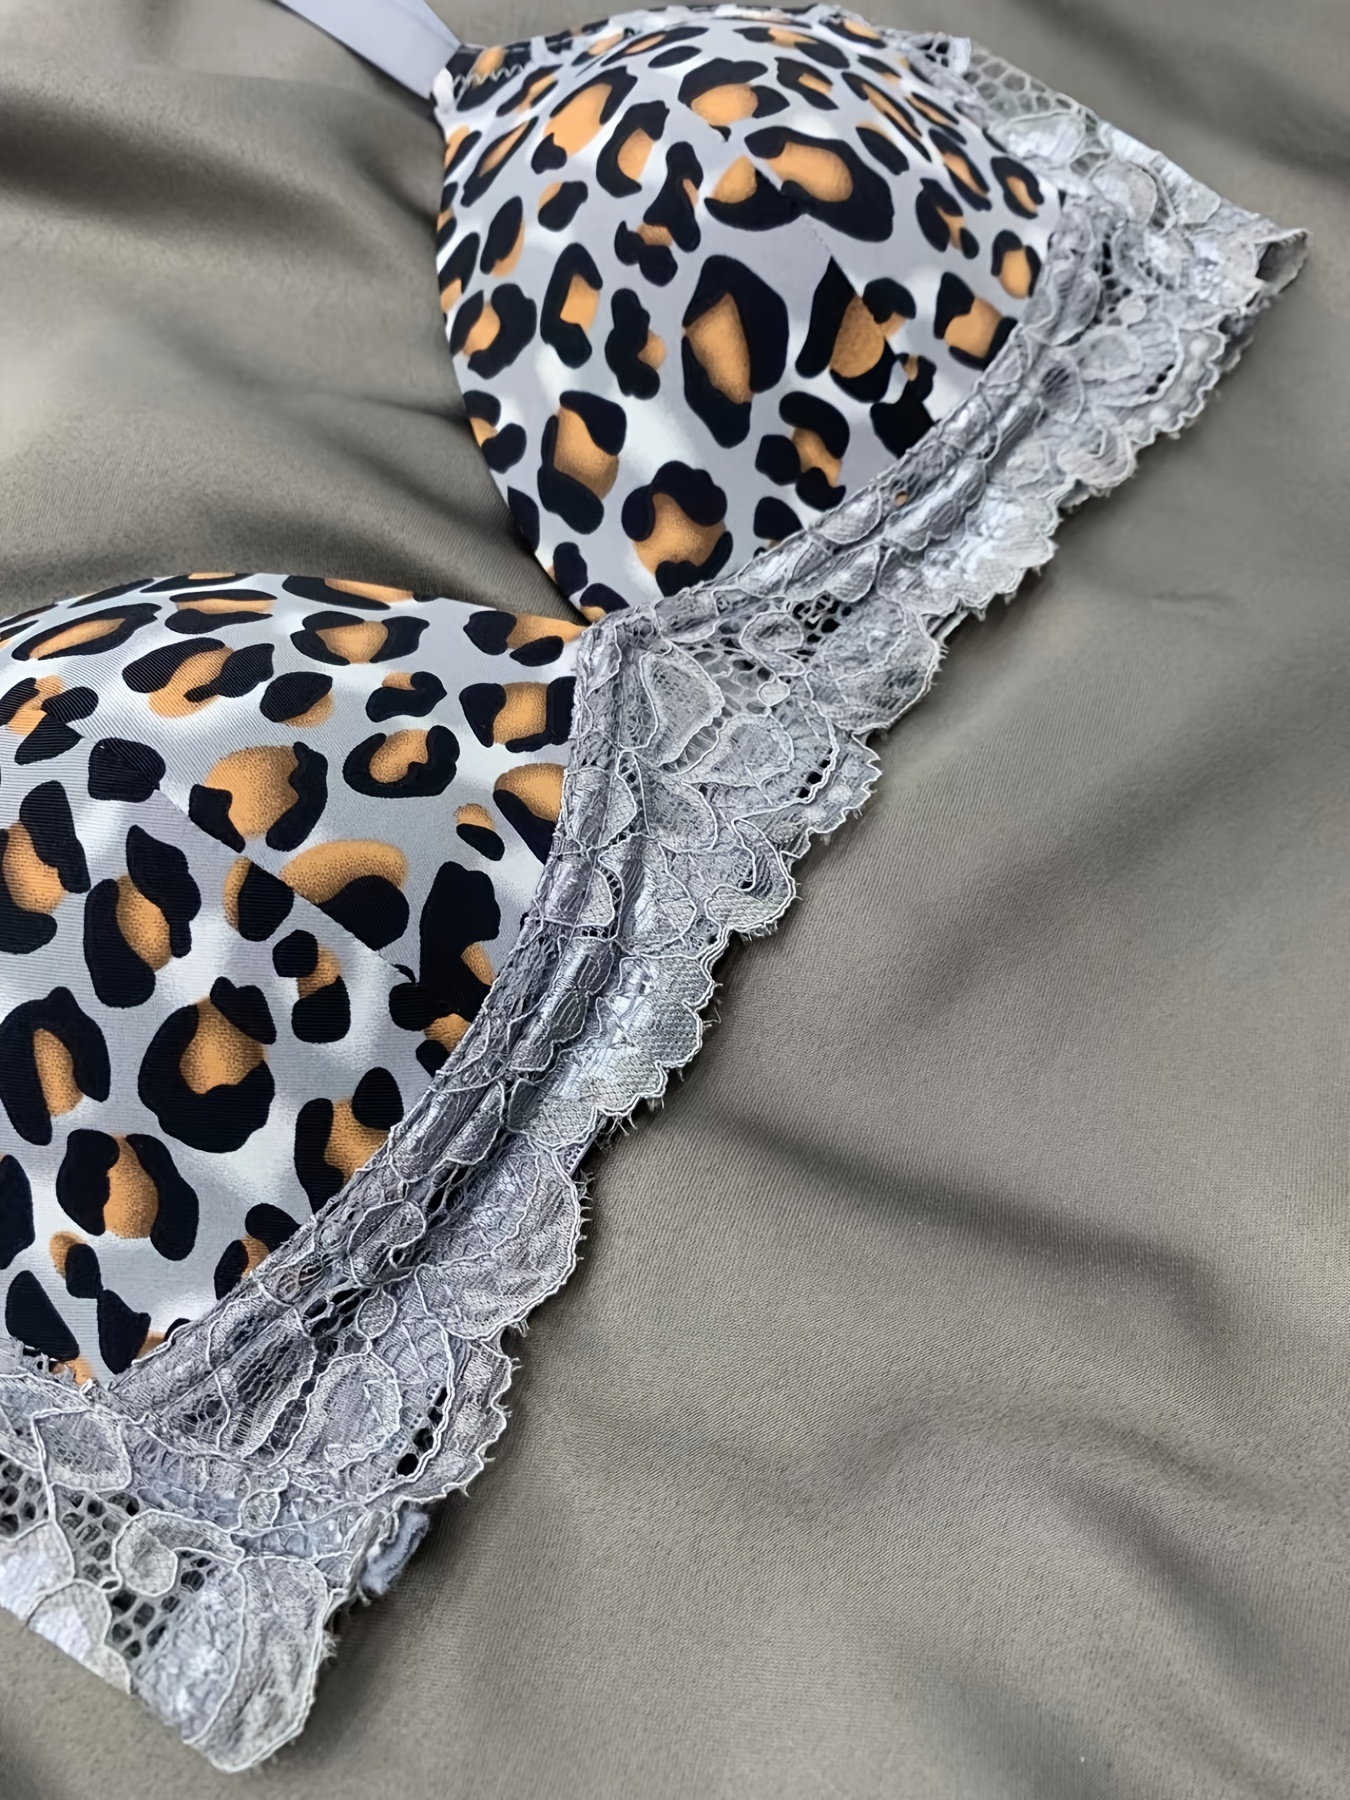 Best Deal for Women Lace Bra Set Underwear Leopard Print Push Up